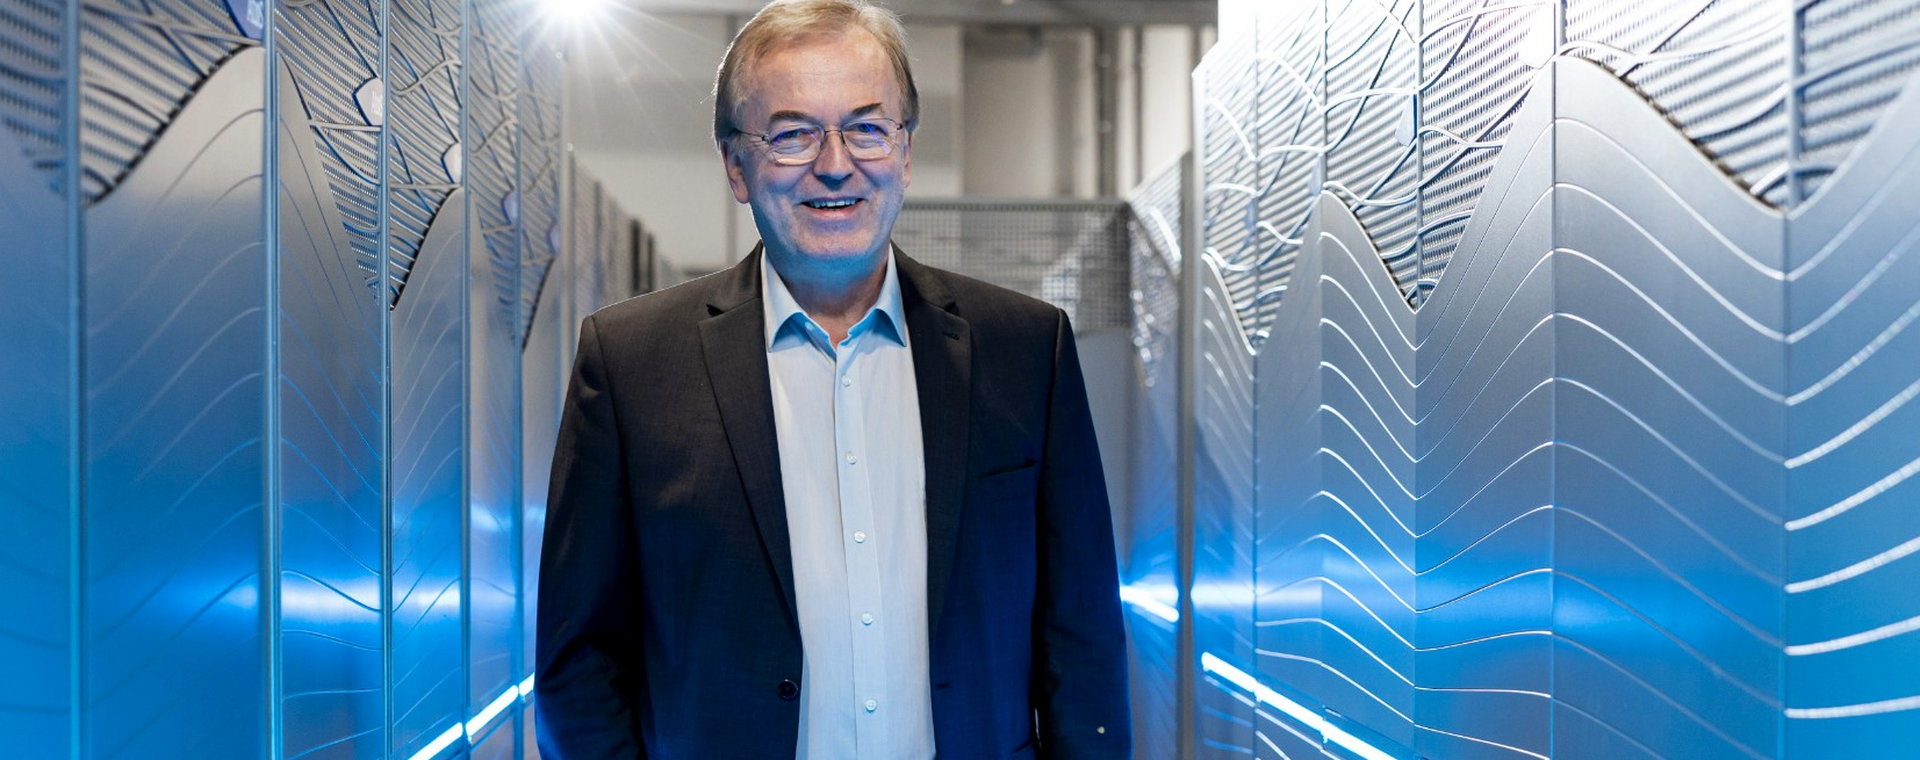 Prof Thomas Lippert, dyrektor centrum superkomputerowego Jülich w Forschungszentrum Jülich